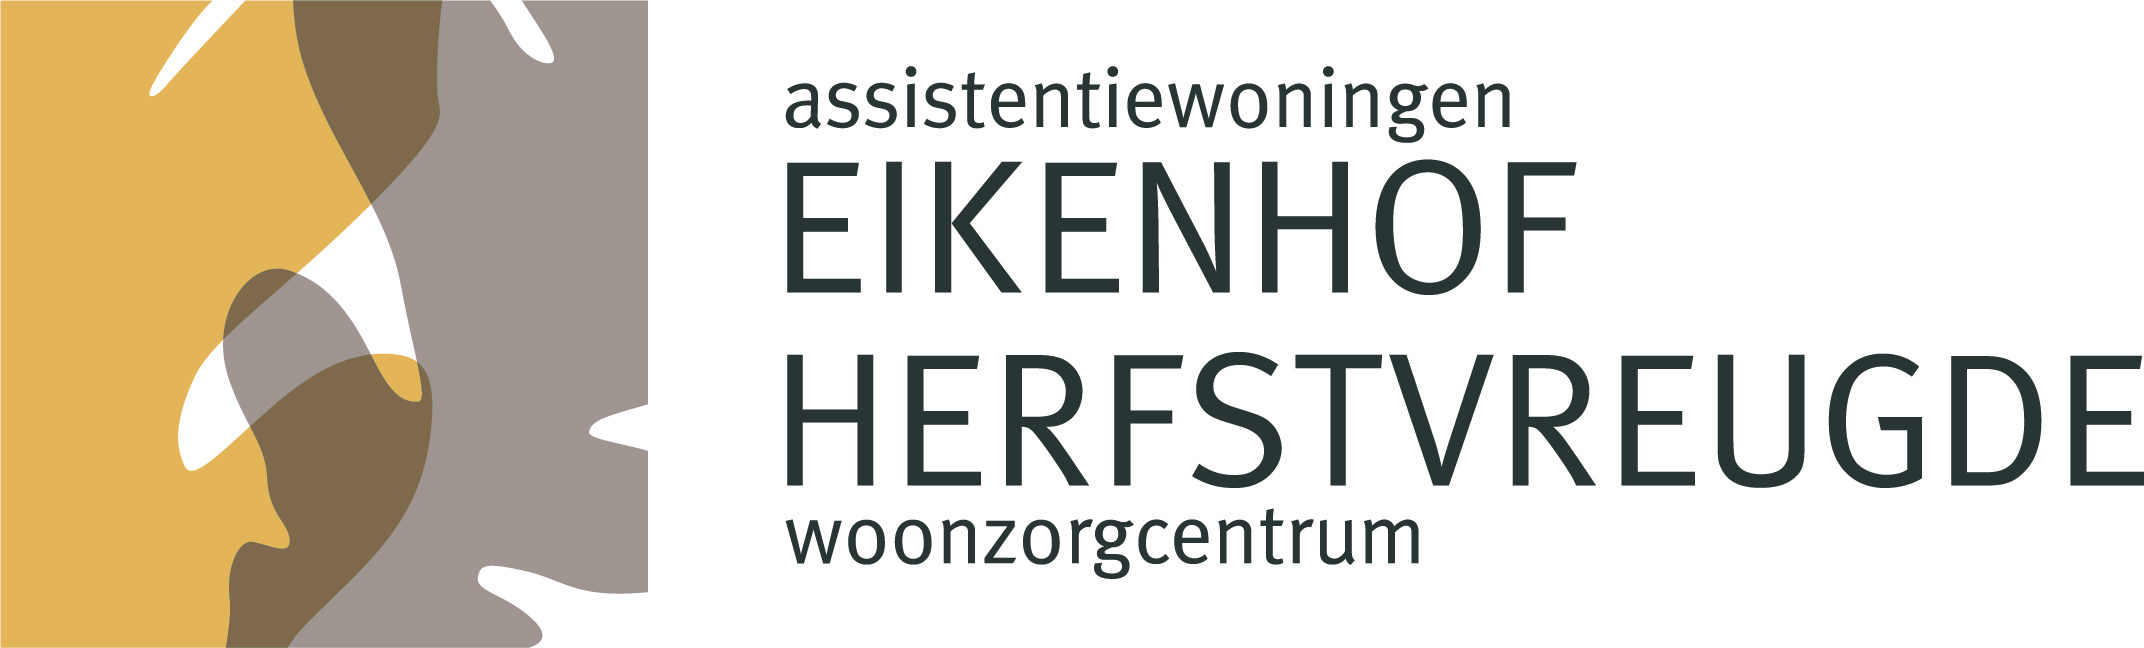 Logo Assistentiewoningen Eikenhof/Woonzorgcentrum Herfstvreugde